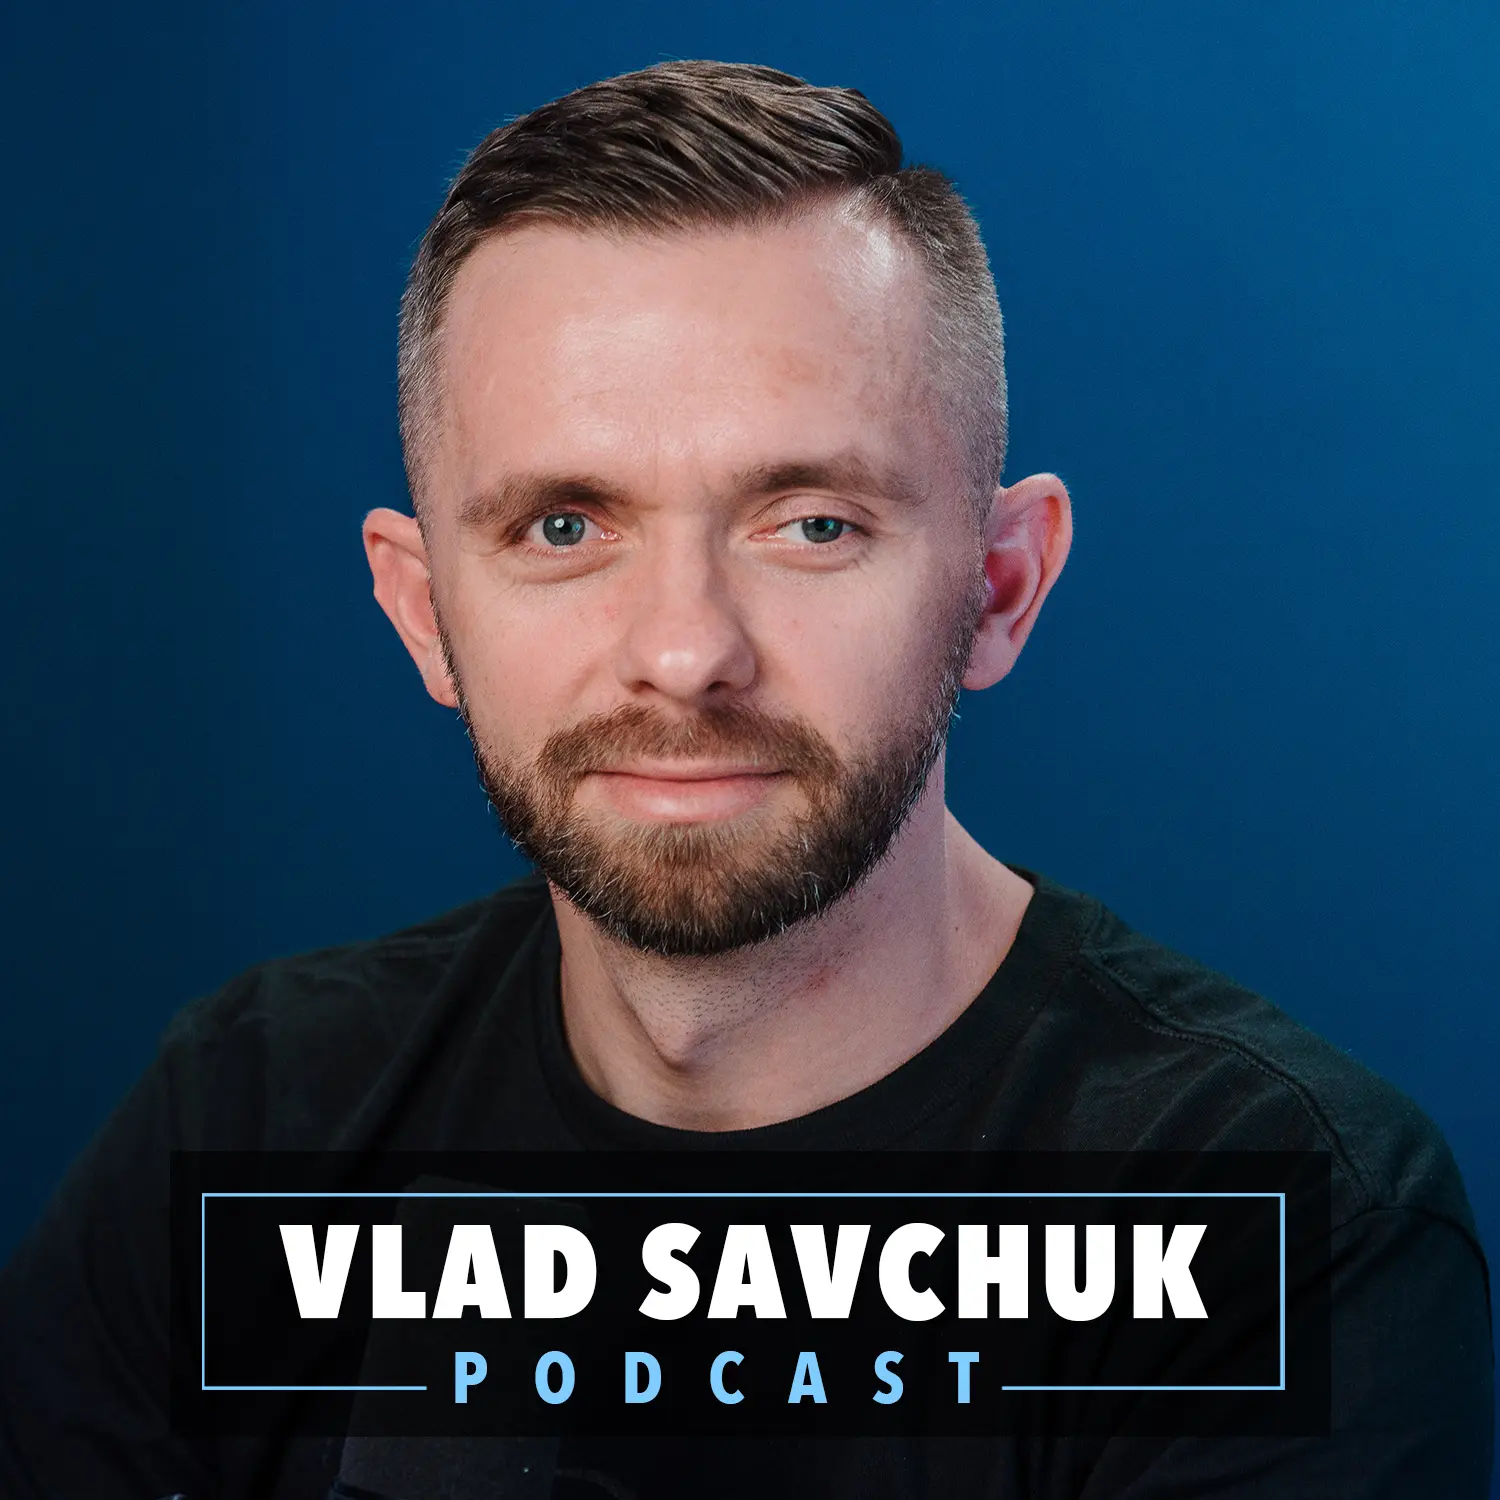 resource - Vlad Savchuk Podcast